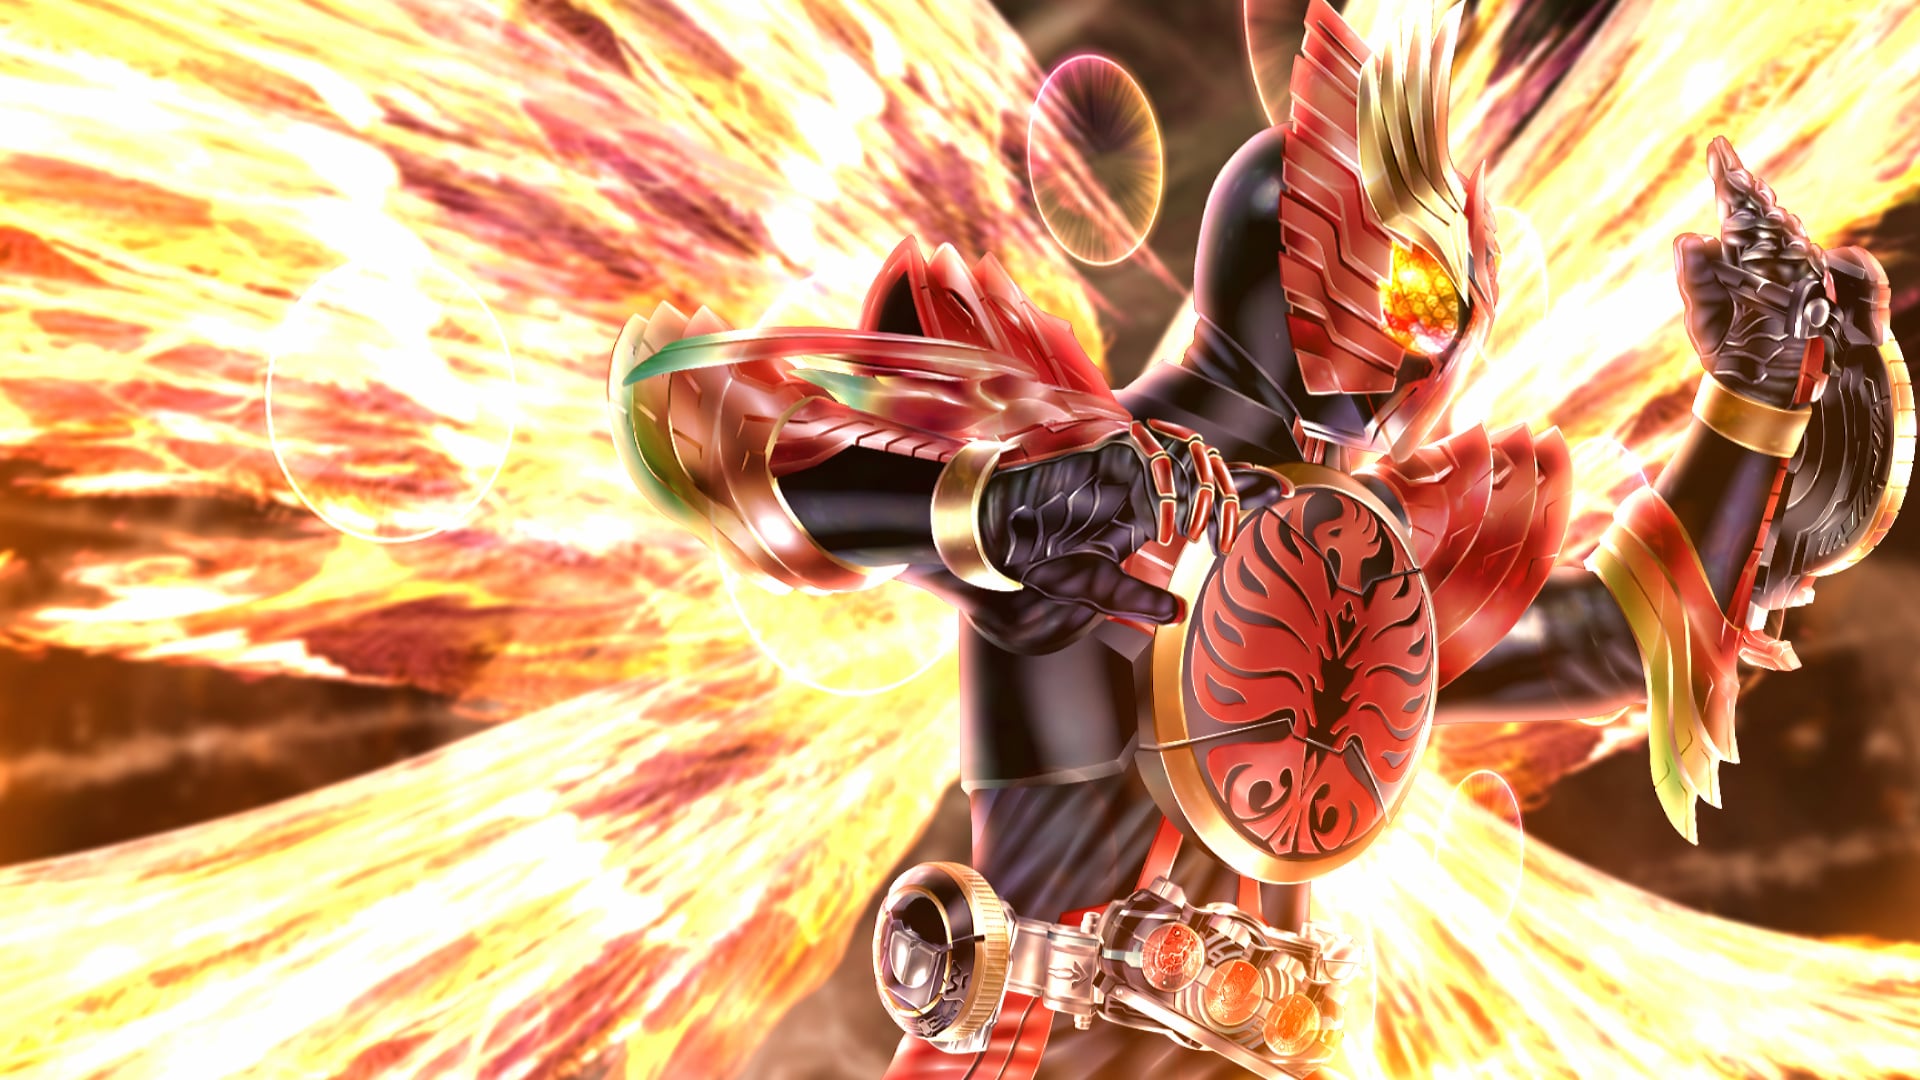 Anime Kamen Rider Ooo at 1024 x 1024 iPad size wallpapers HD quality